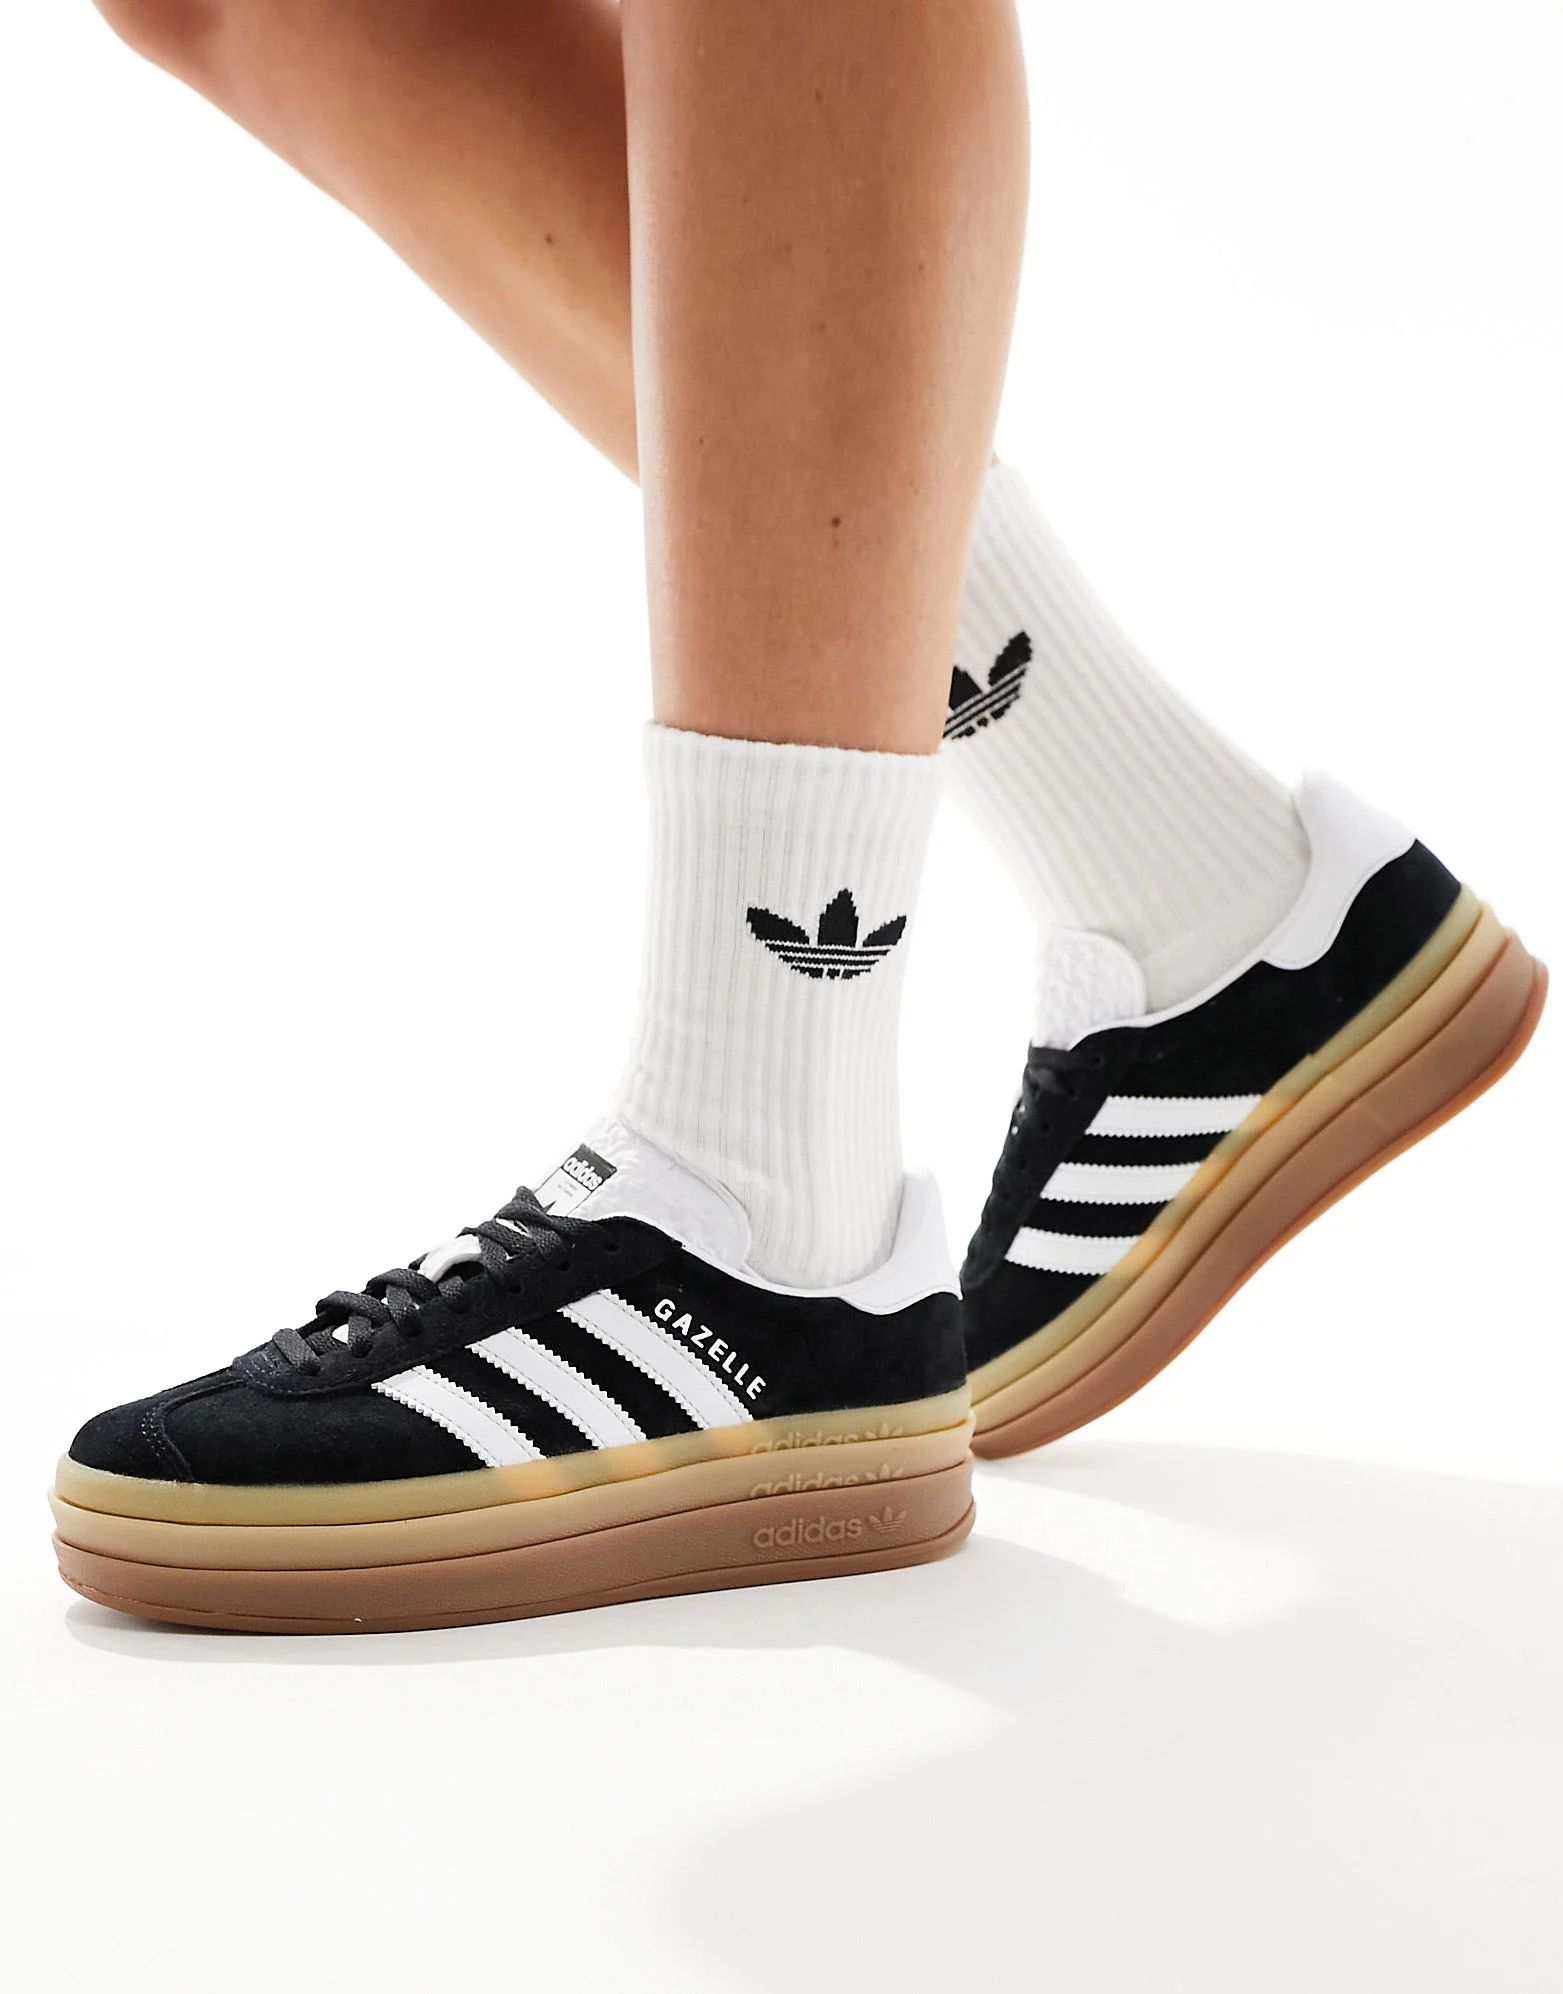 adidas Originals Gazelle Bold gum sole sneakers in black | ASOS | ASOS (Global)